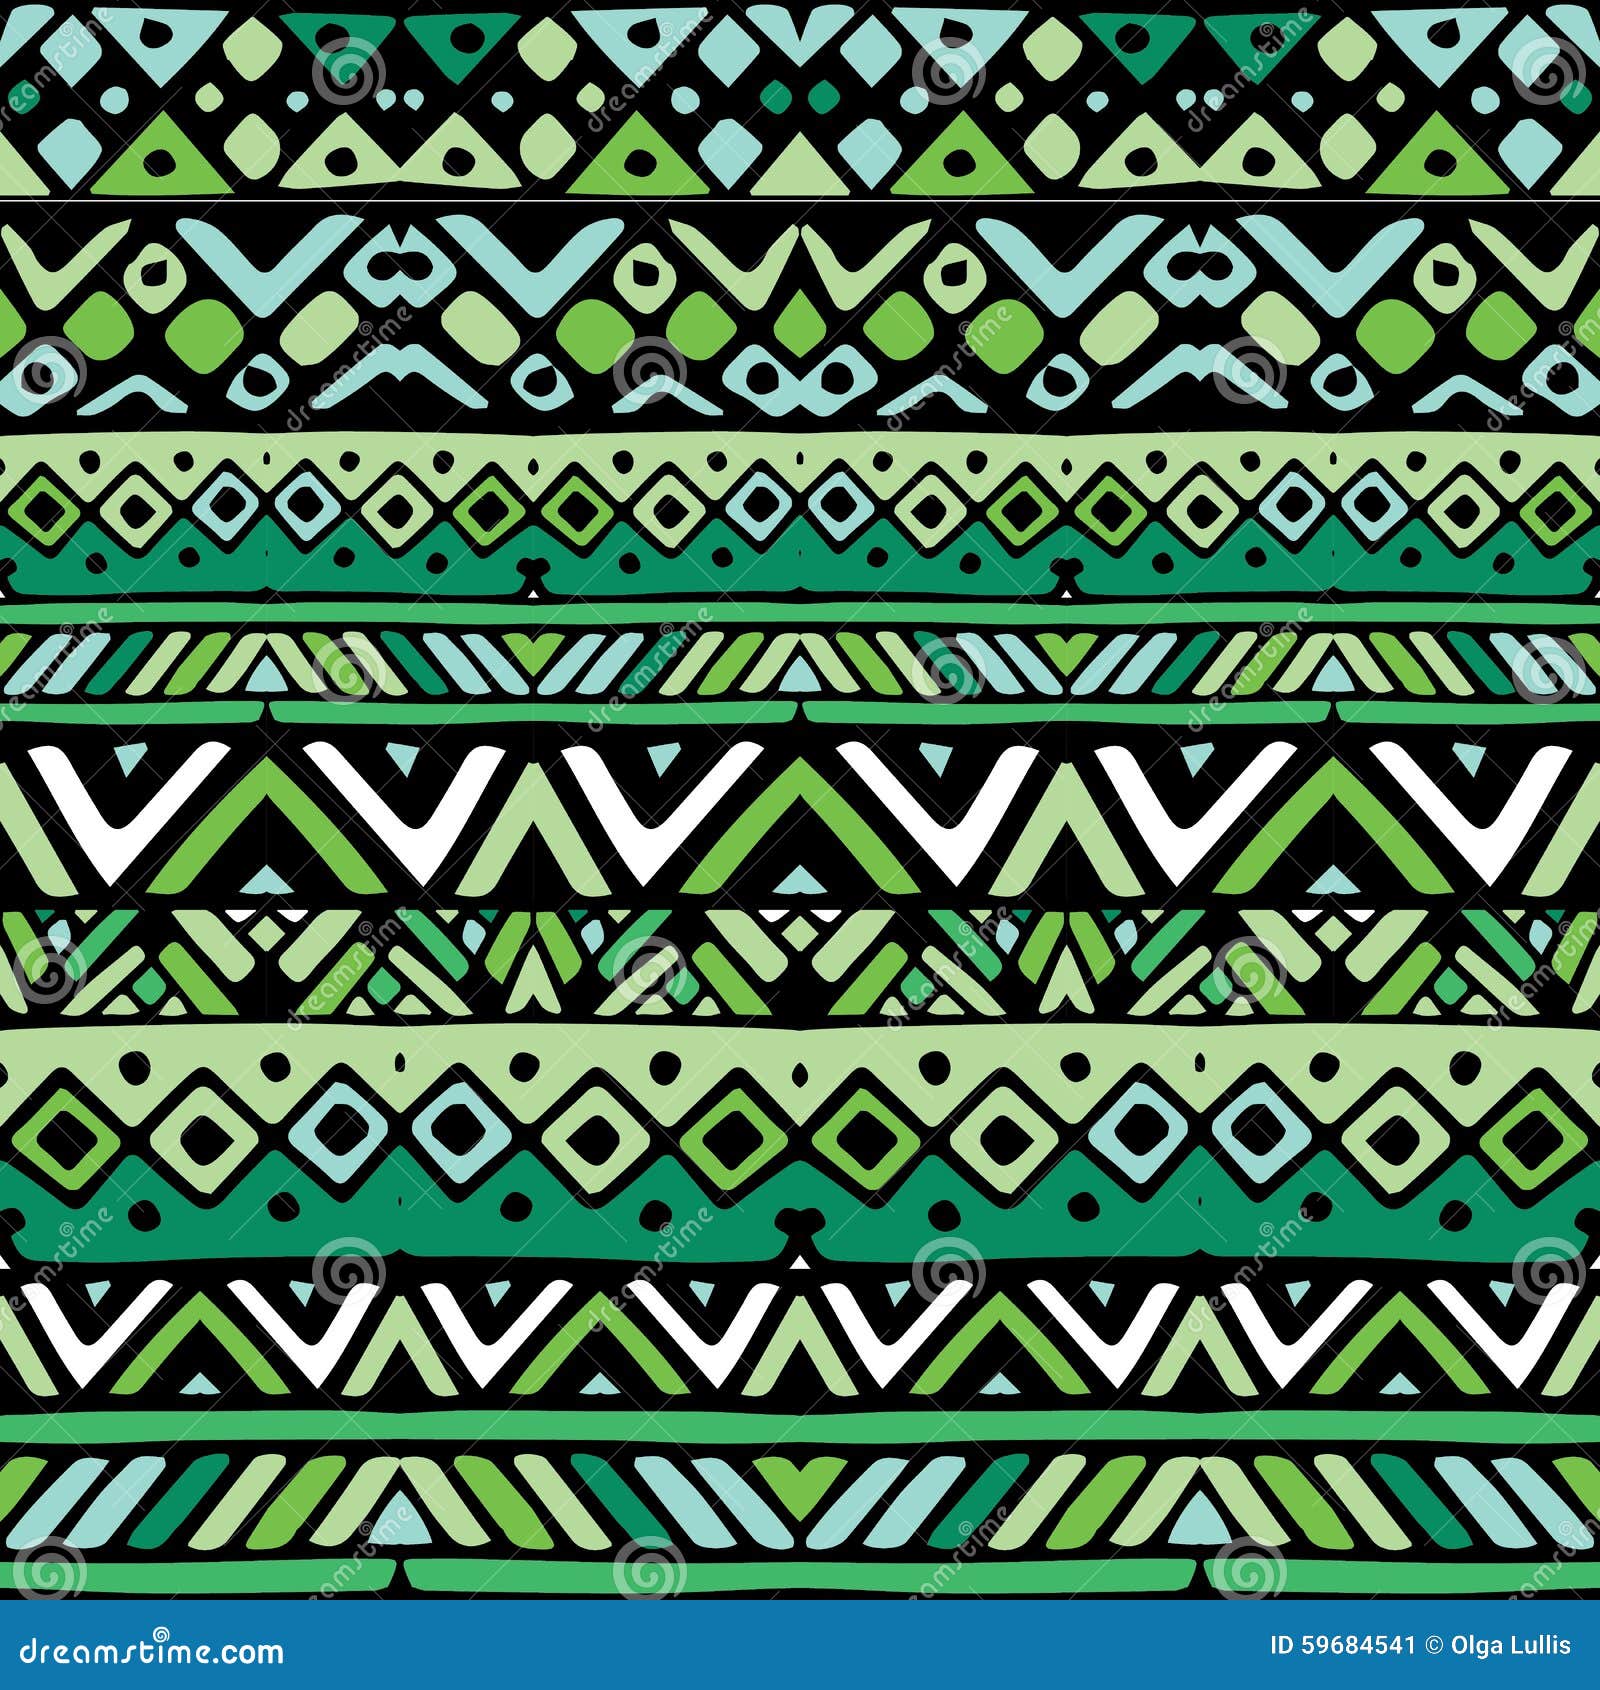 Green Tribal Patterns